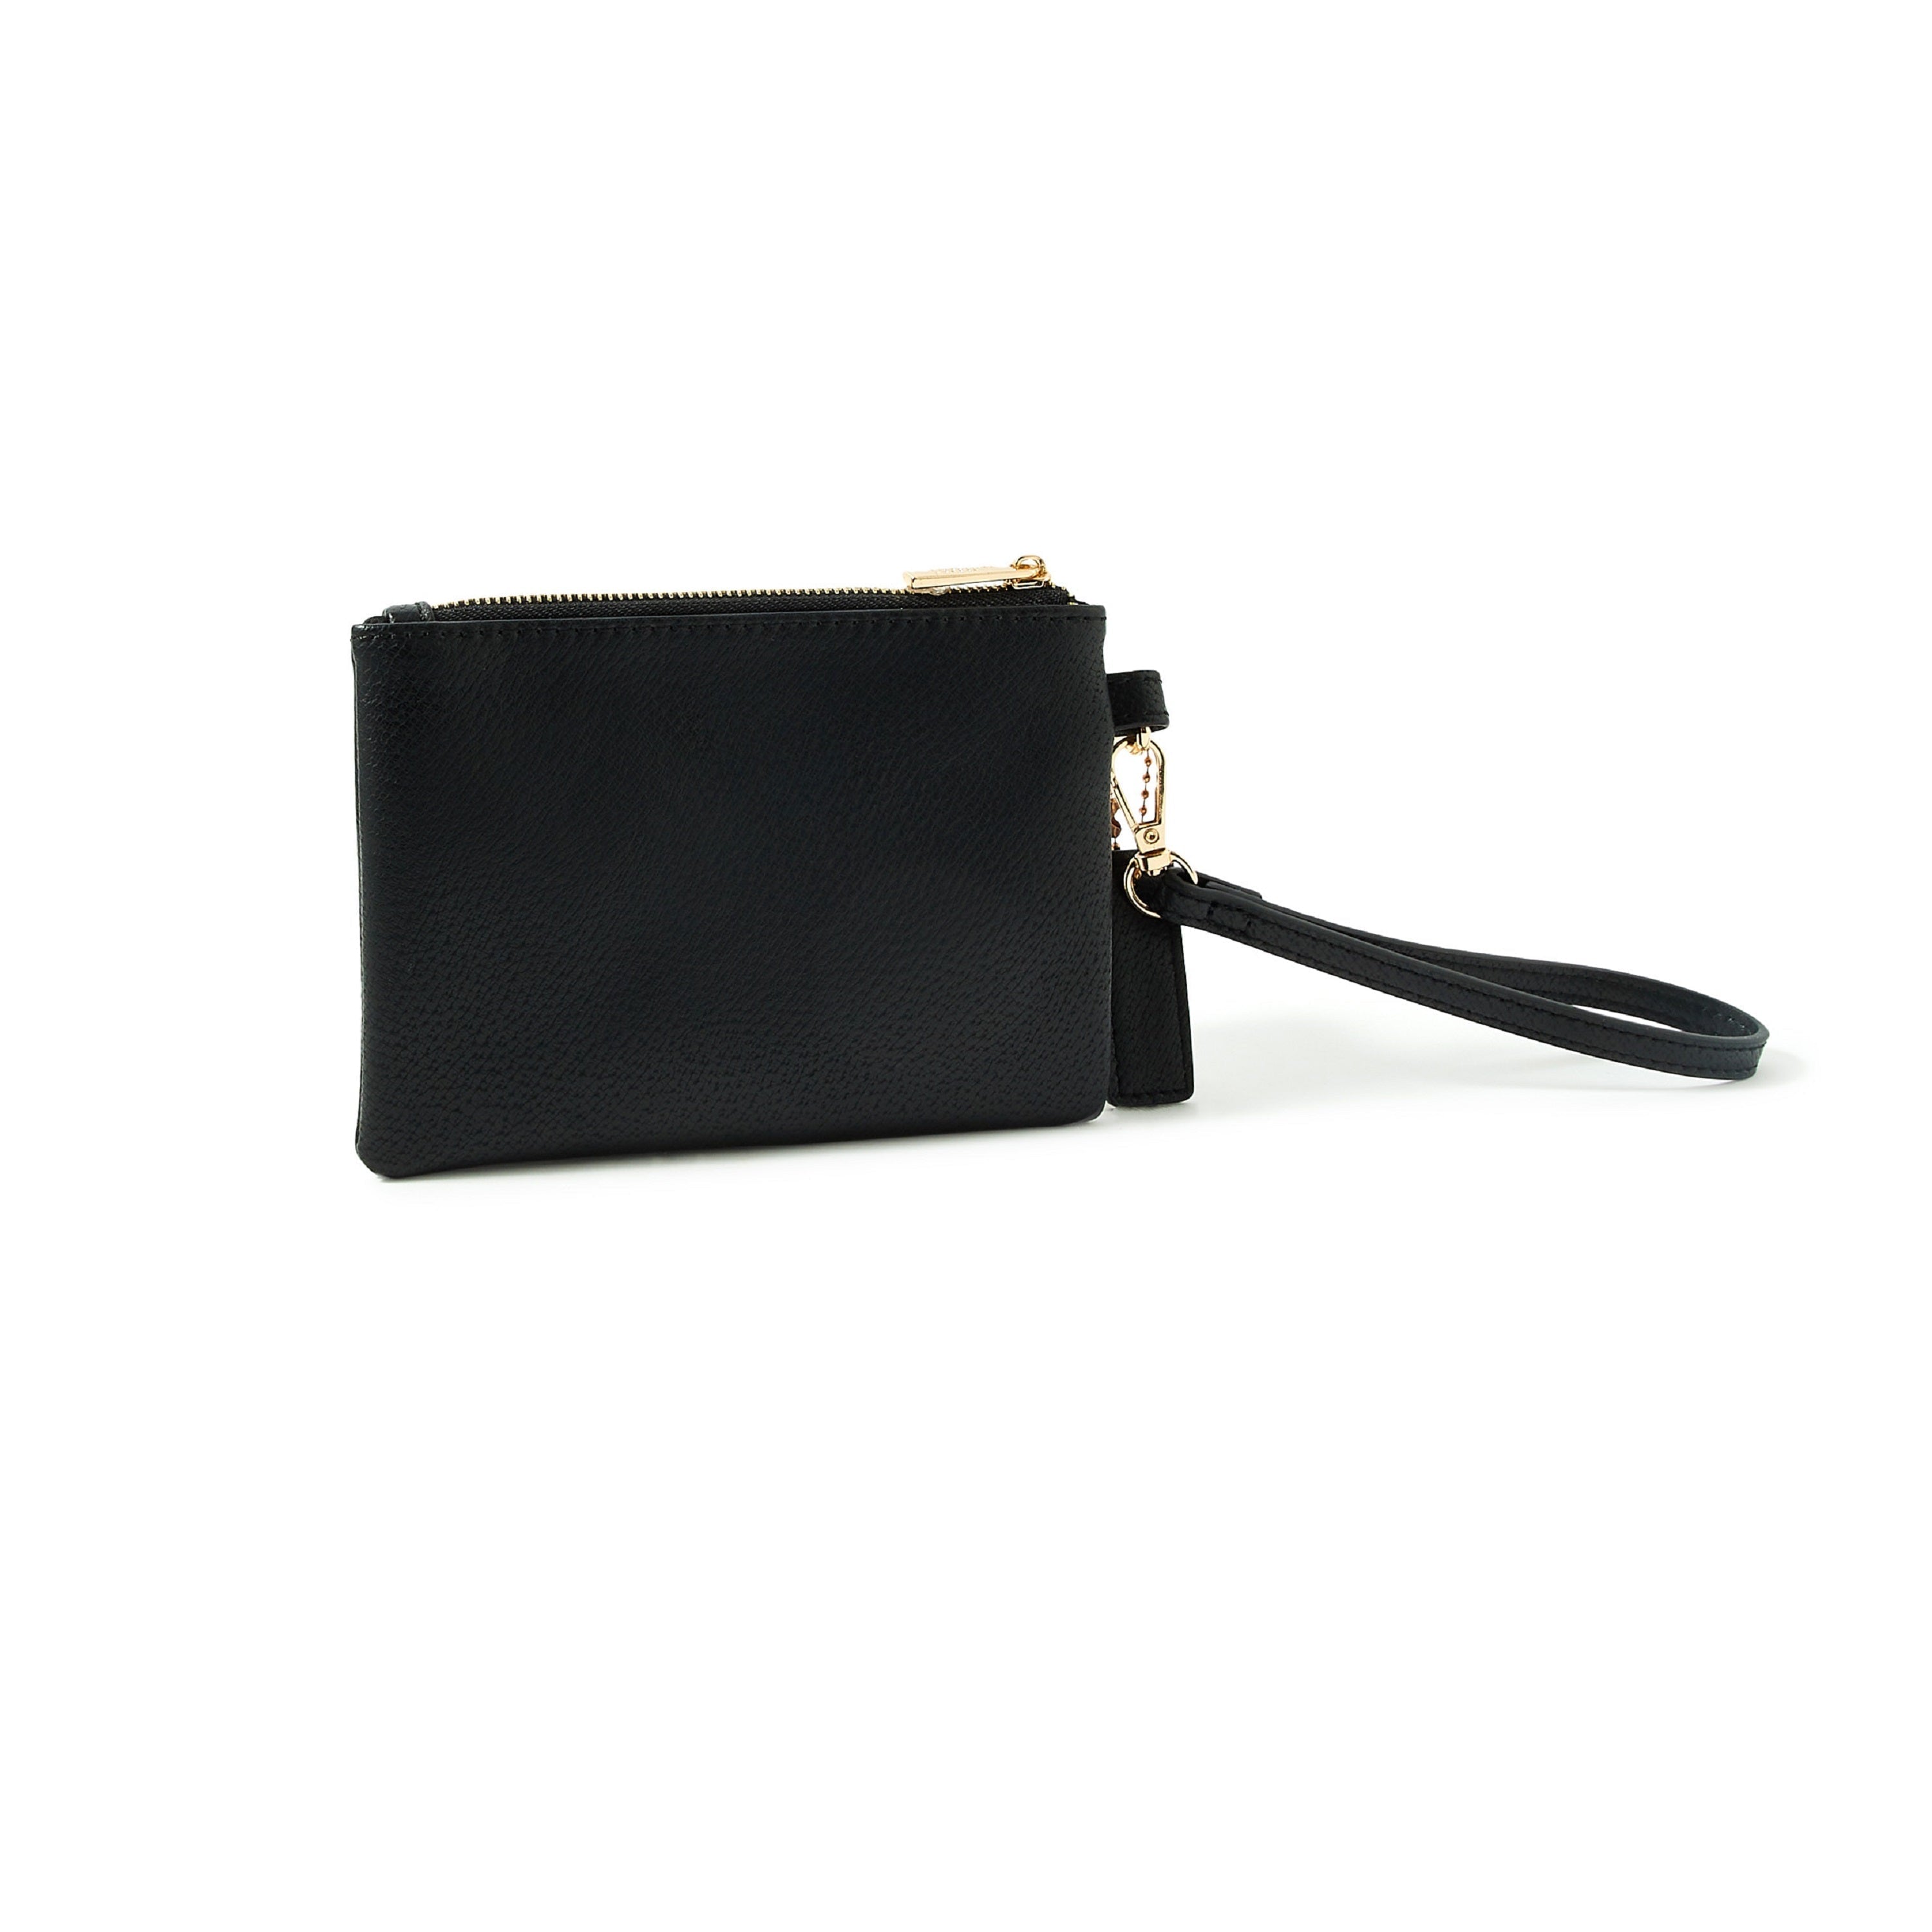 Accessorize London Women's Faux Leather Black Charm Wristlet Wallet